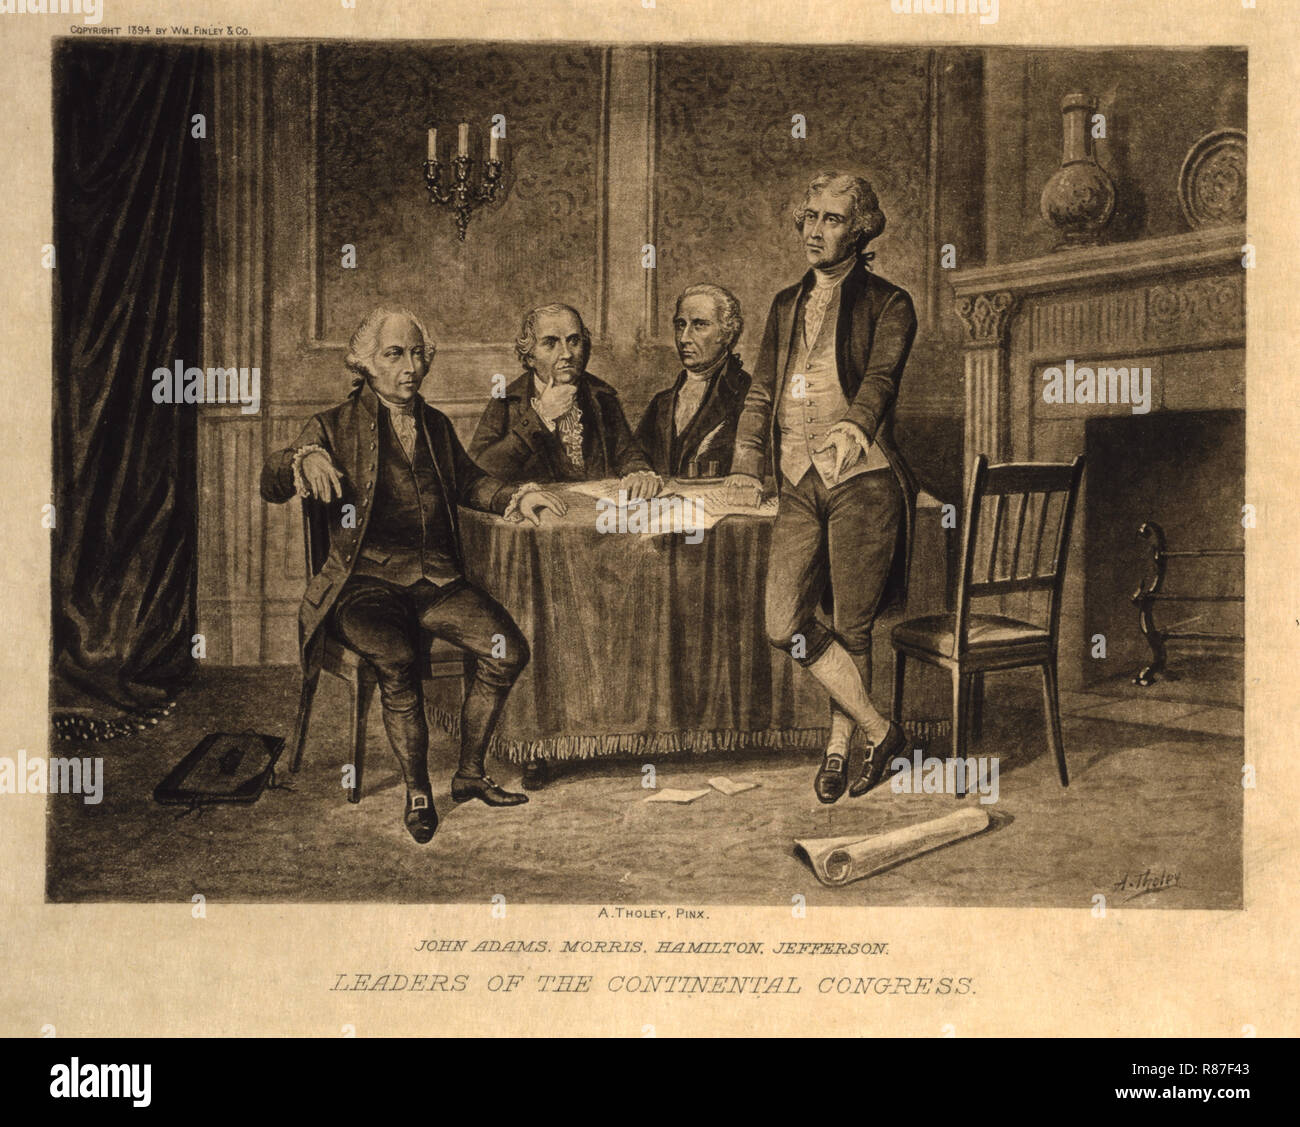 John Adams, Morris, Hamilton, Jefferson, Leaders of the Continental Congress, Augustus Tholey, 1896 Stock Photo